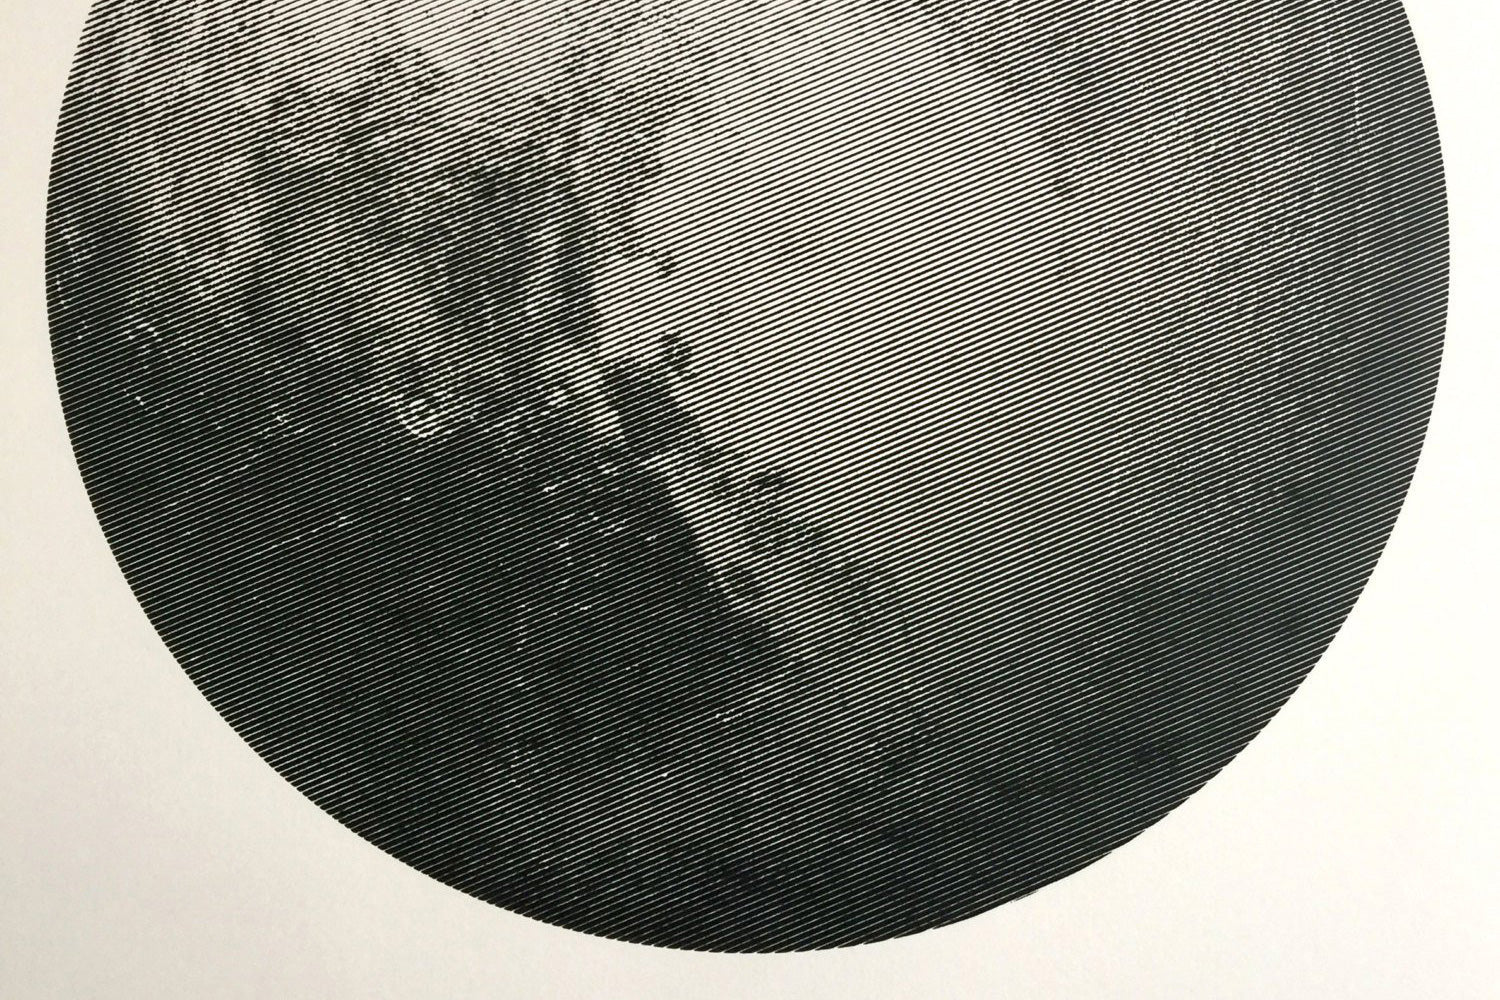 Ex-Planet Pluto Poster